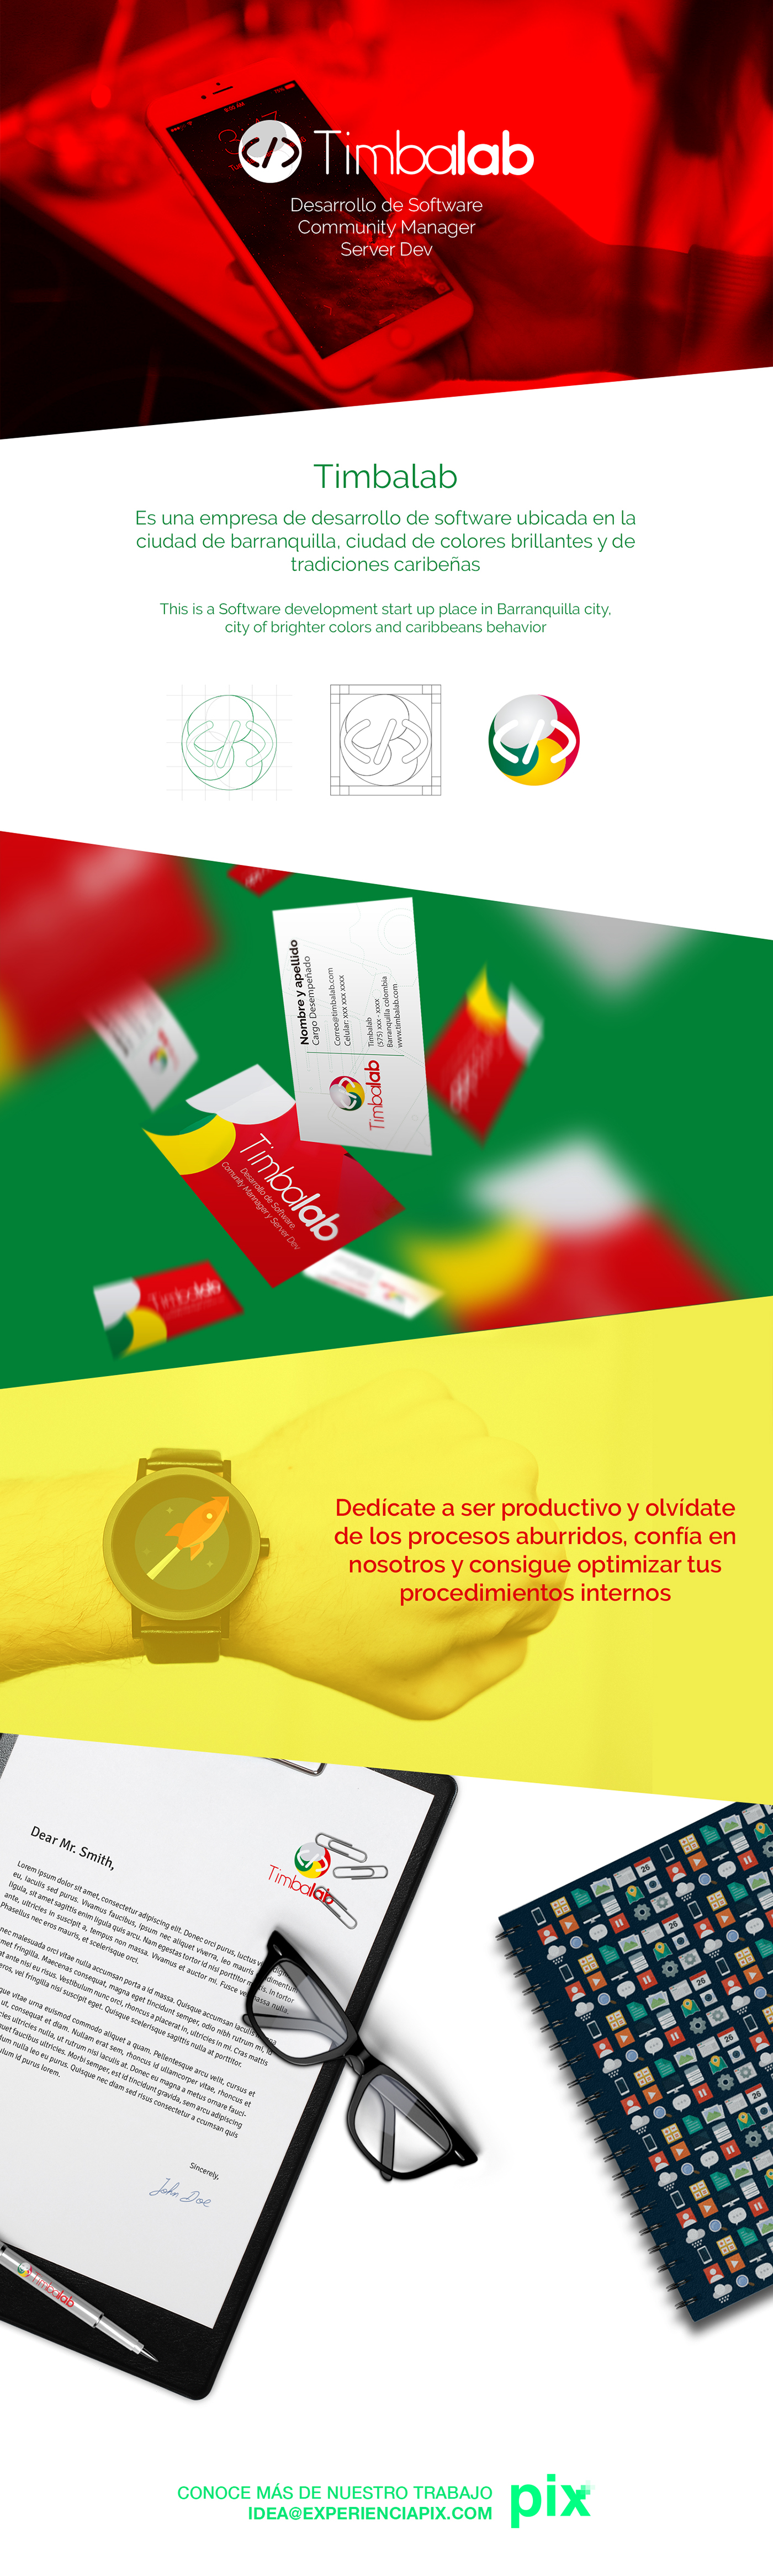 timbalab colombia marketing   logo Web